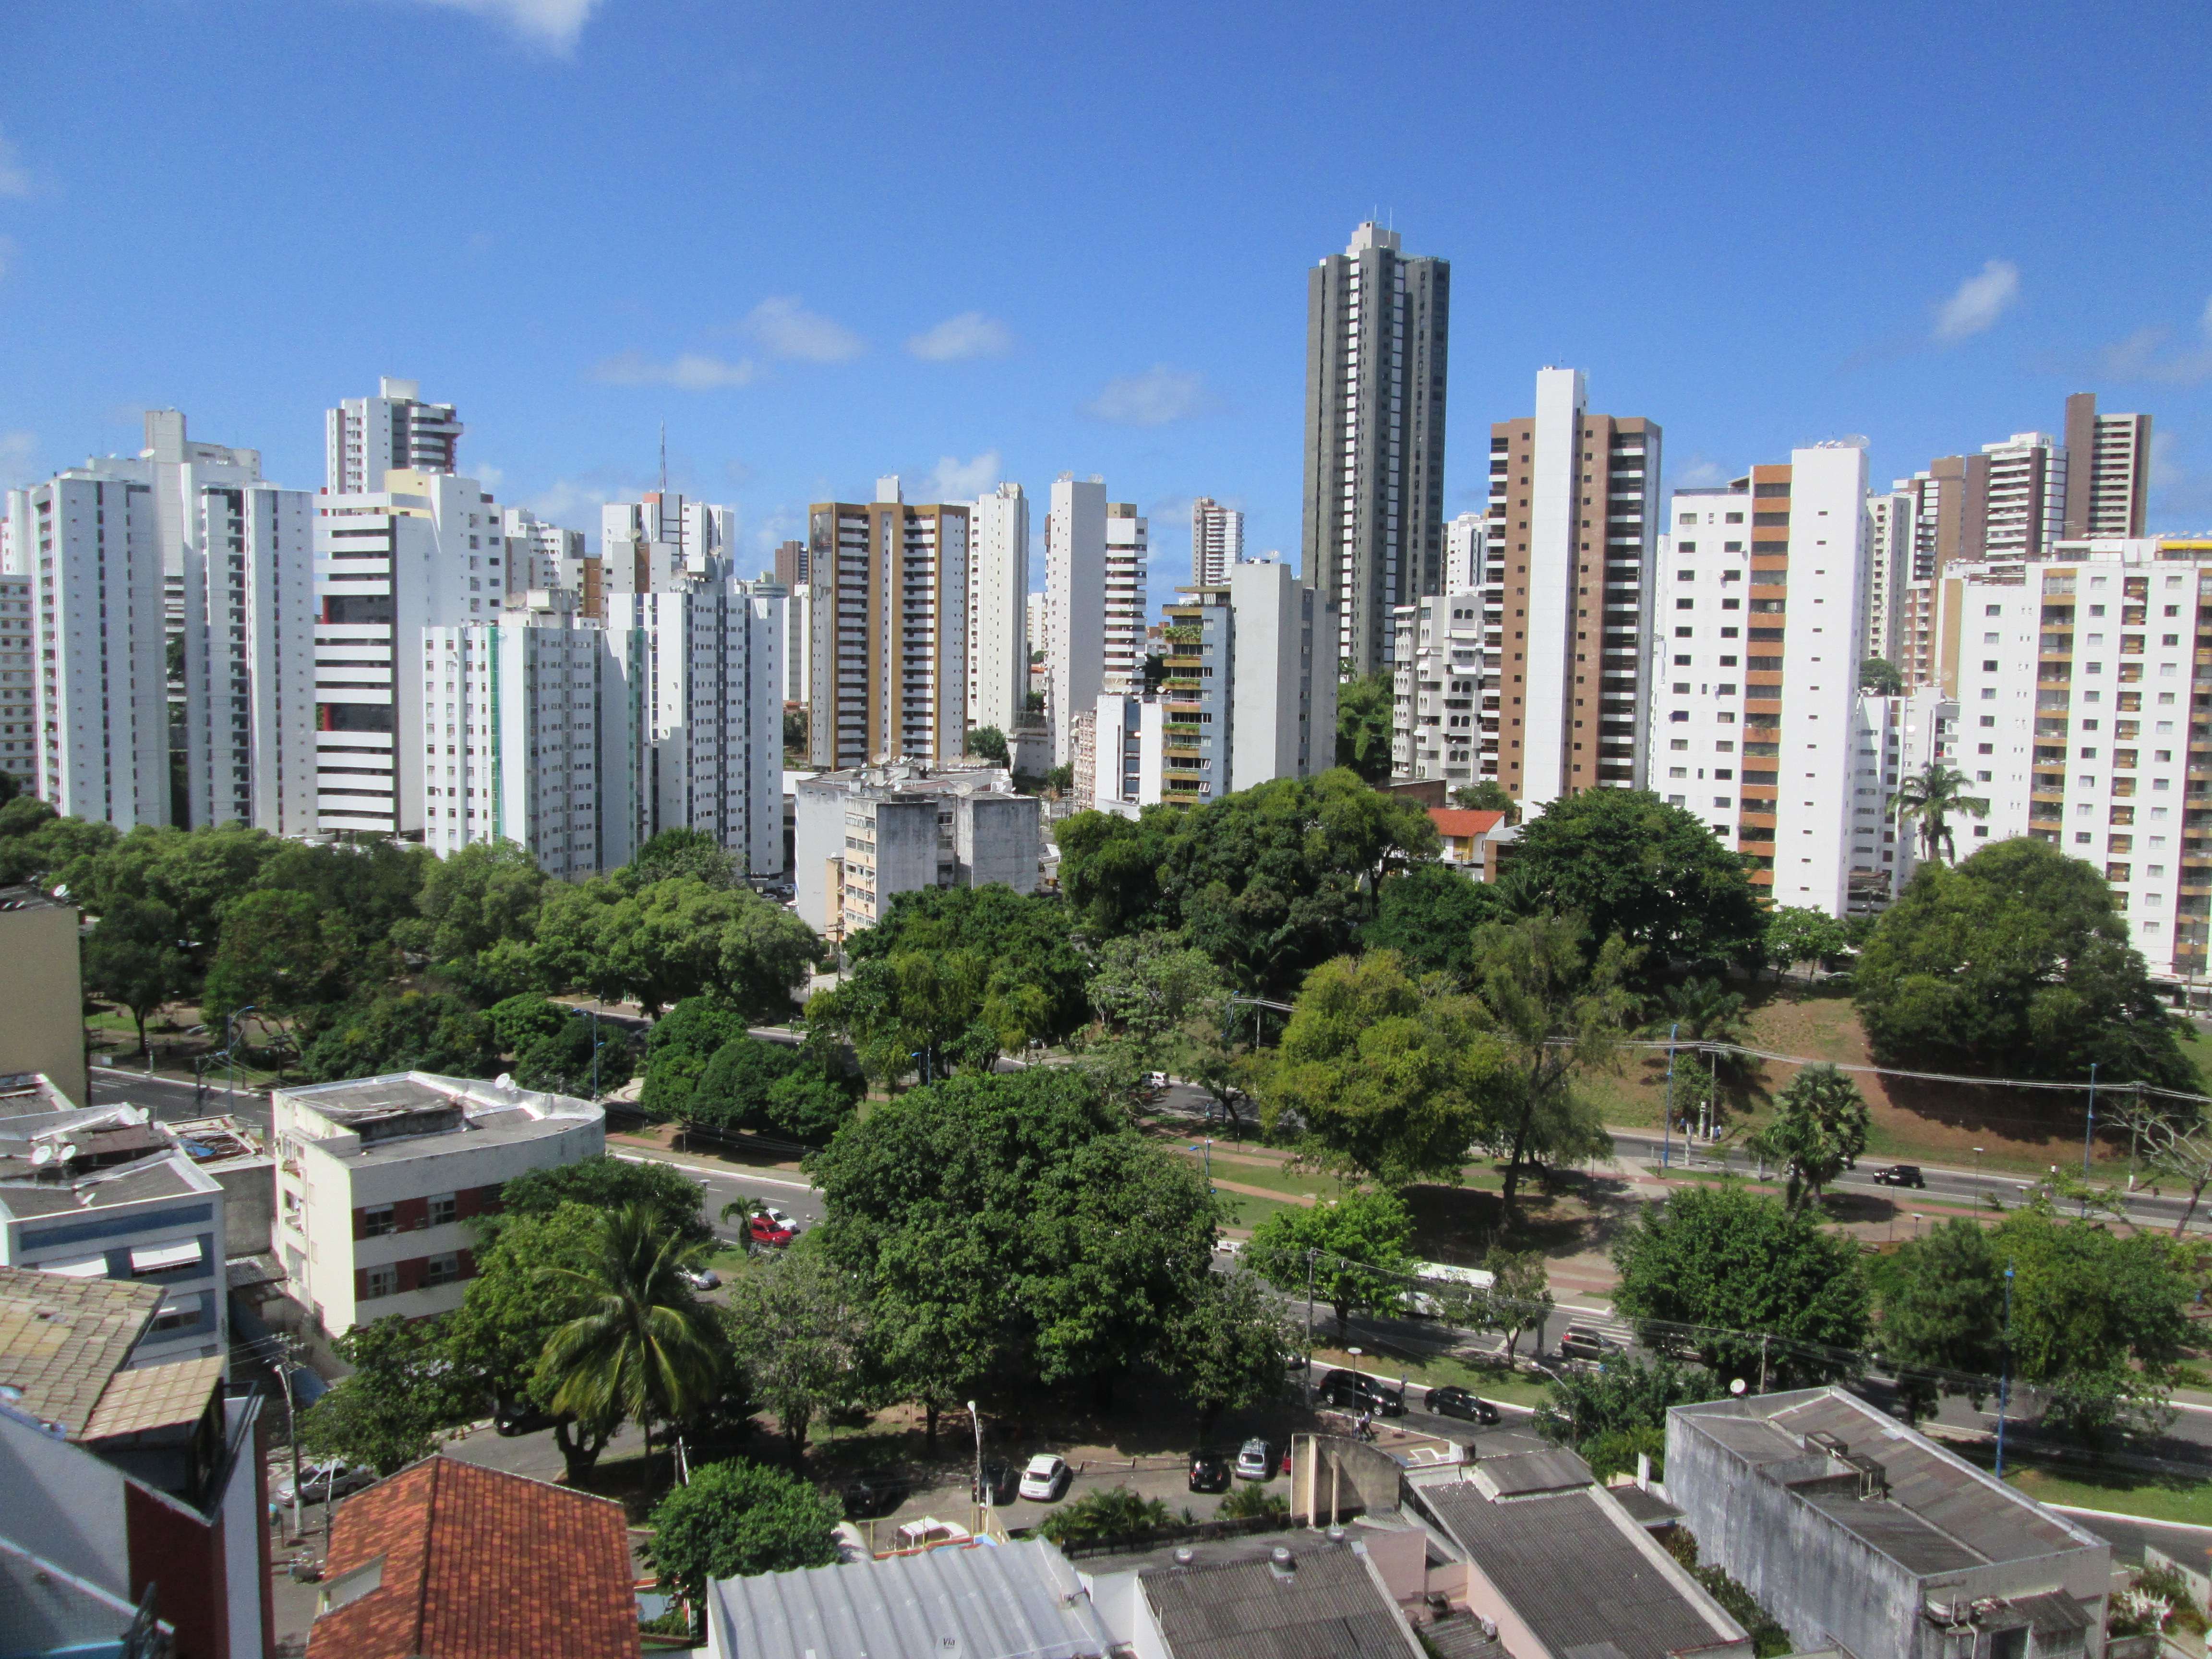 The cityscape of Salvador, Brazil